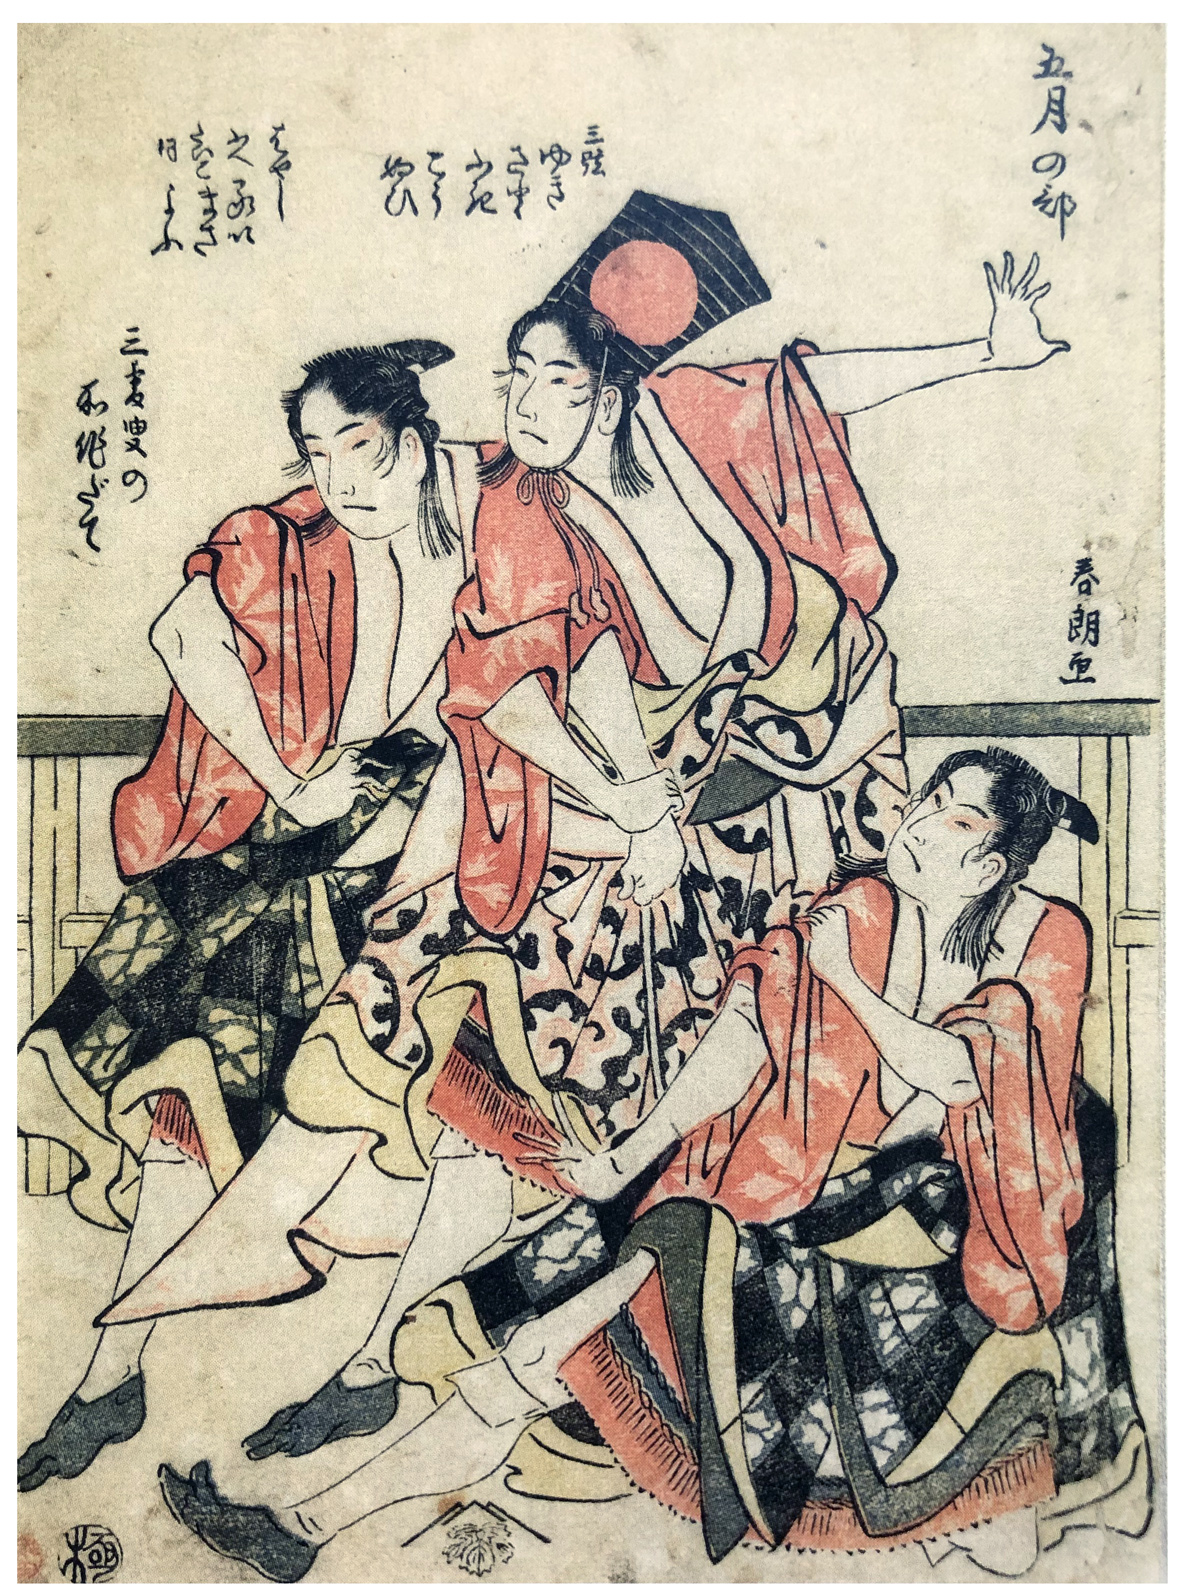 Hokusai - Fifth Month A Dashing Sanbaso Dance Play - Shunro Period